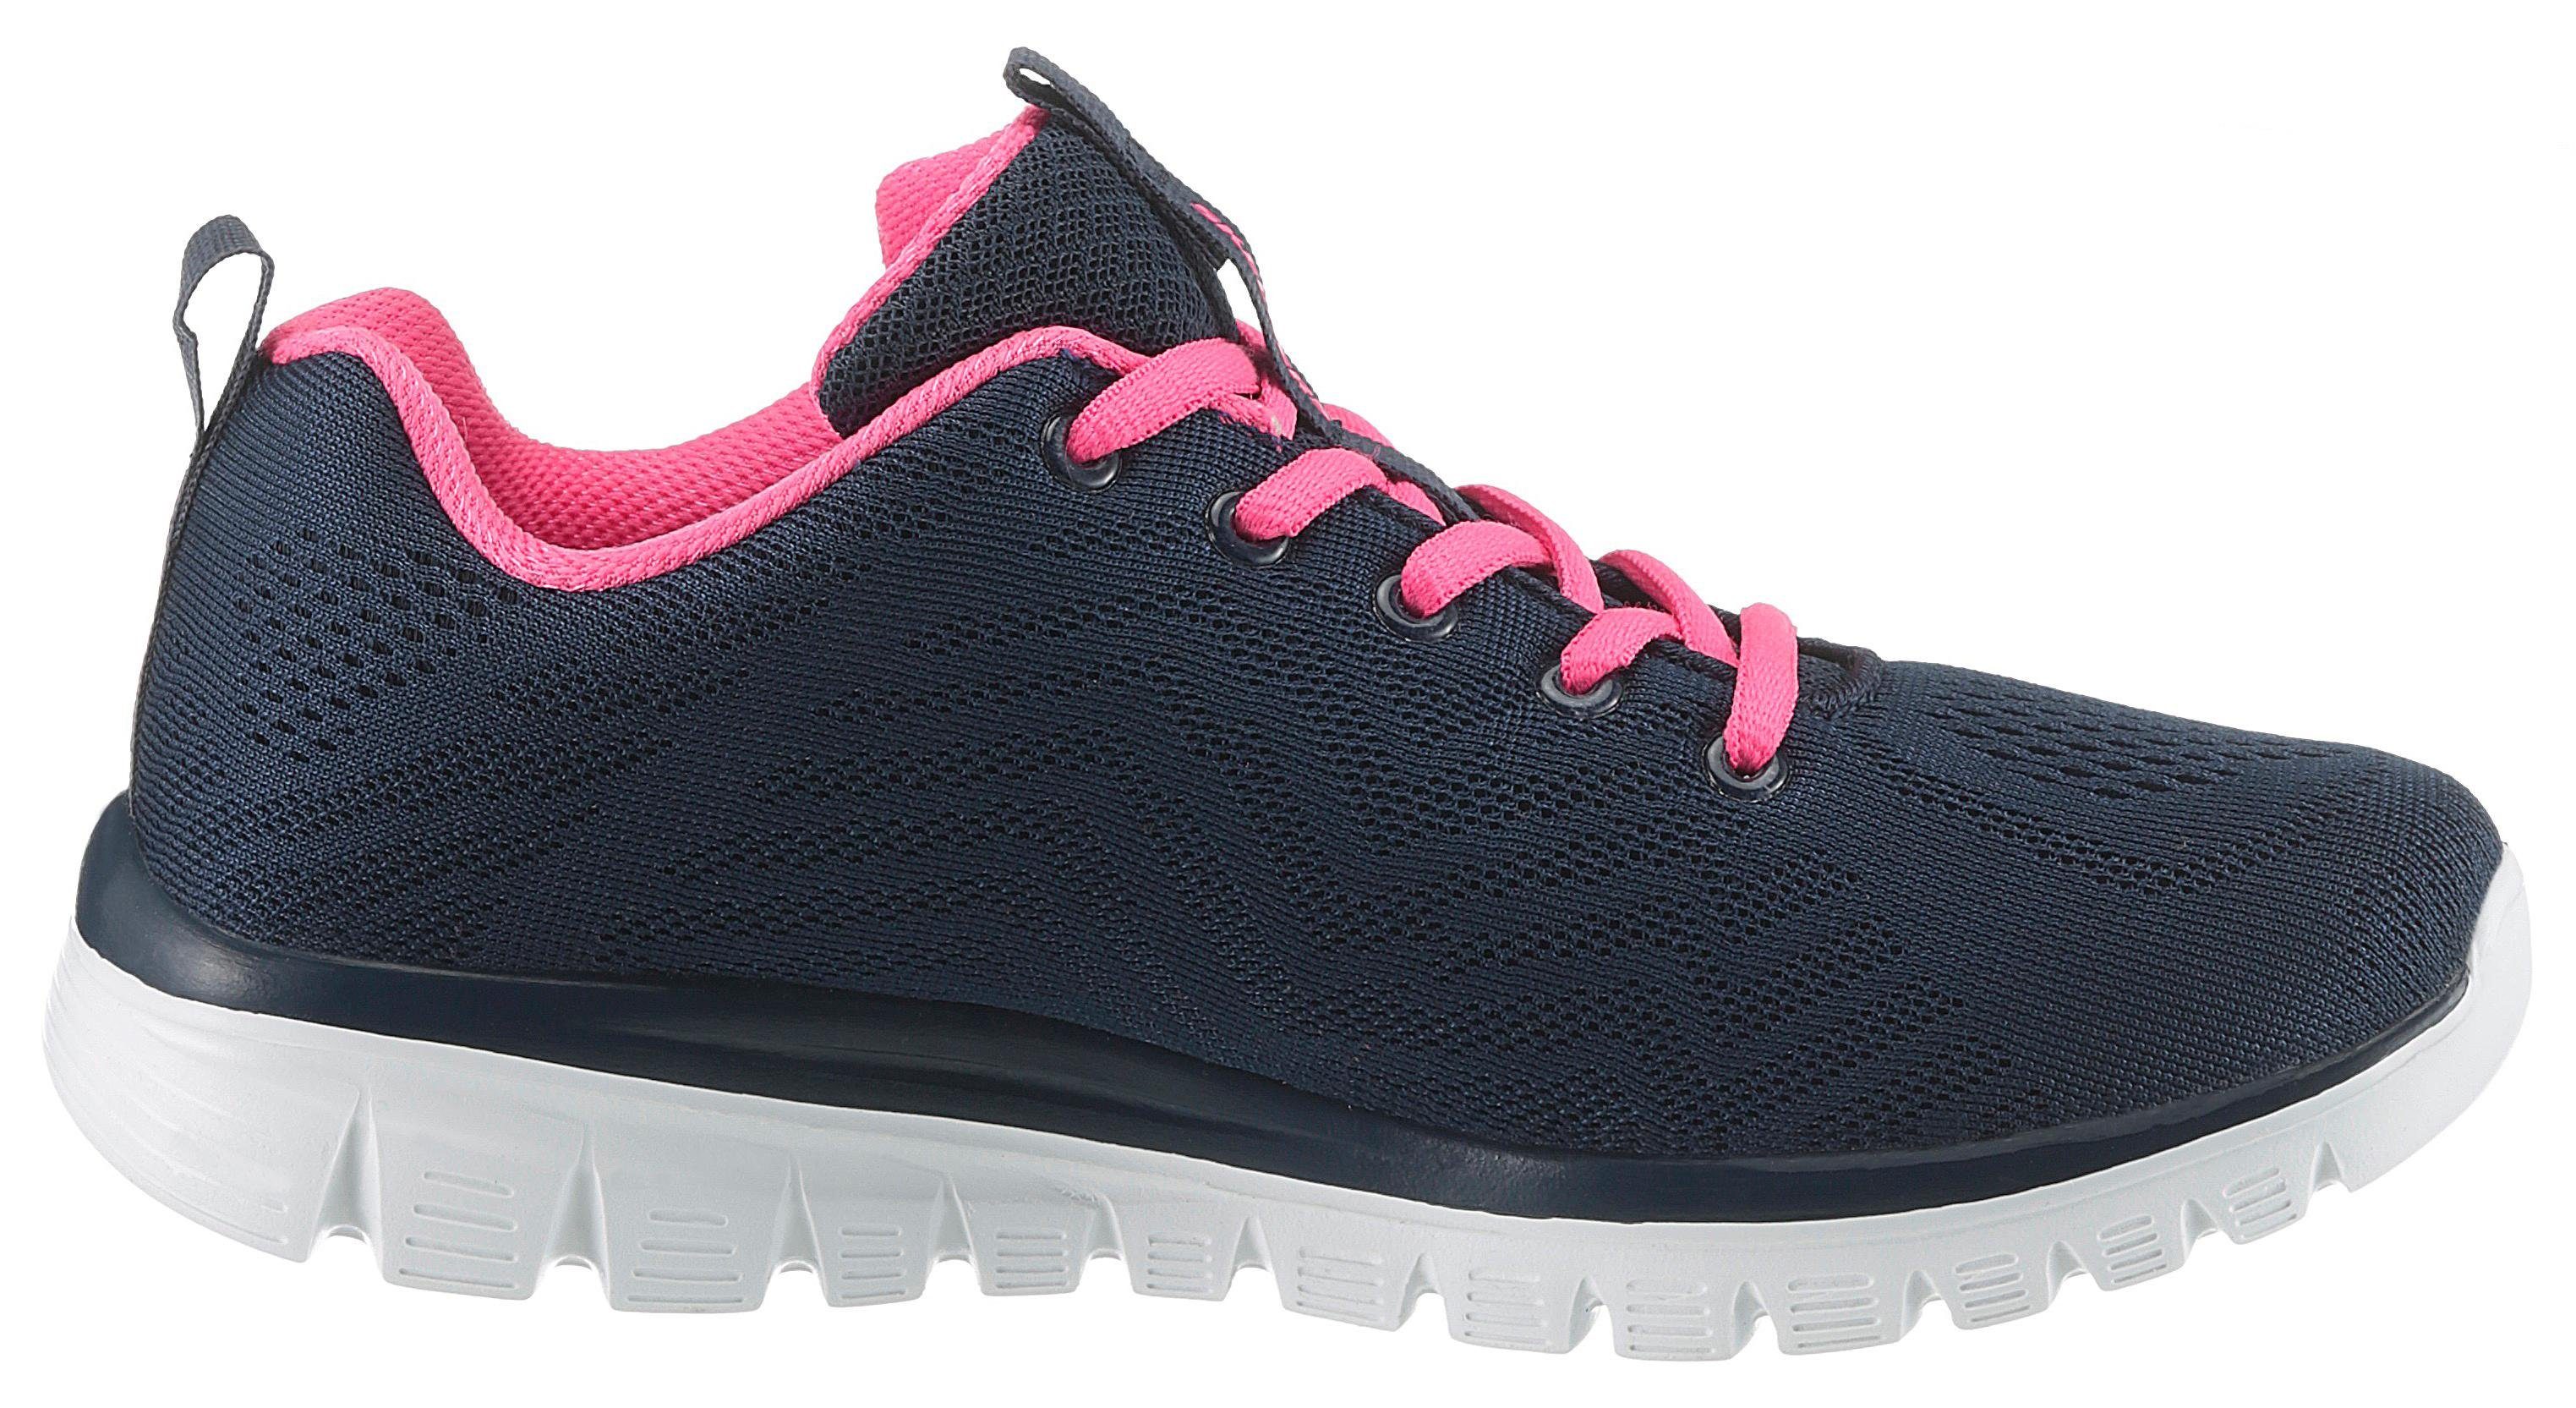 navy-pink durch Get Skechers Graceful mit Memory Connected Foam - Sneaker Dämpfung